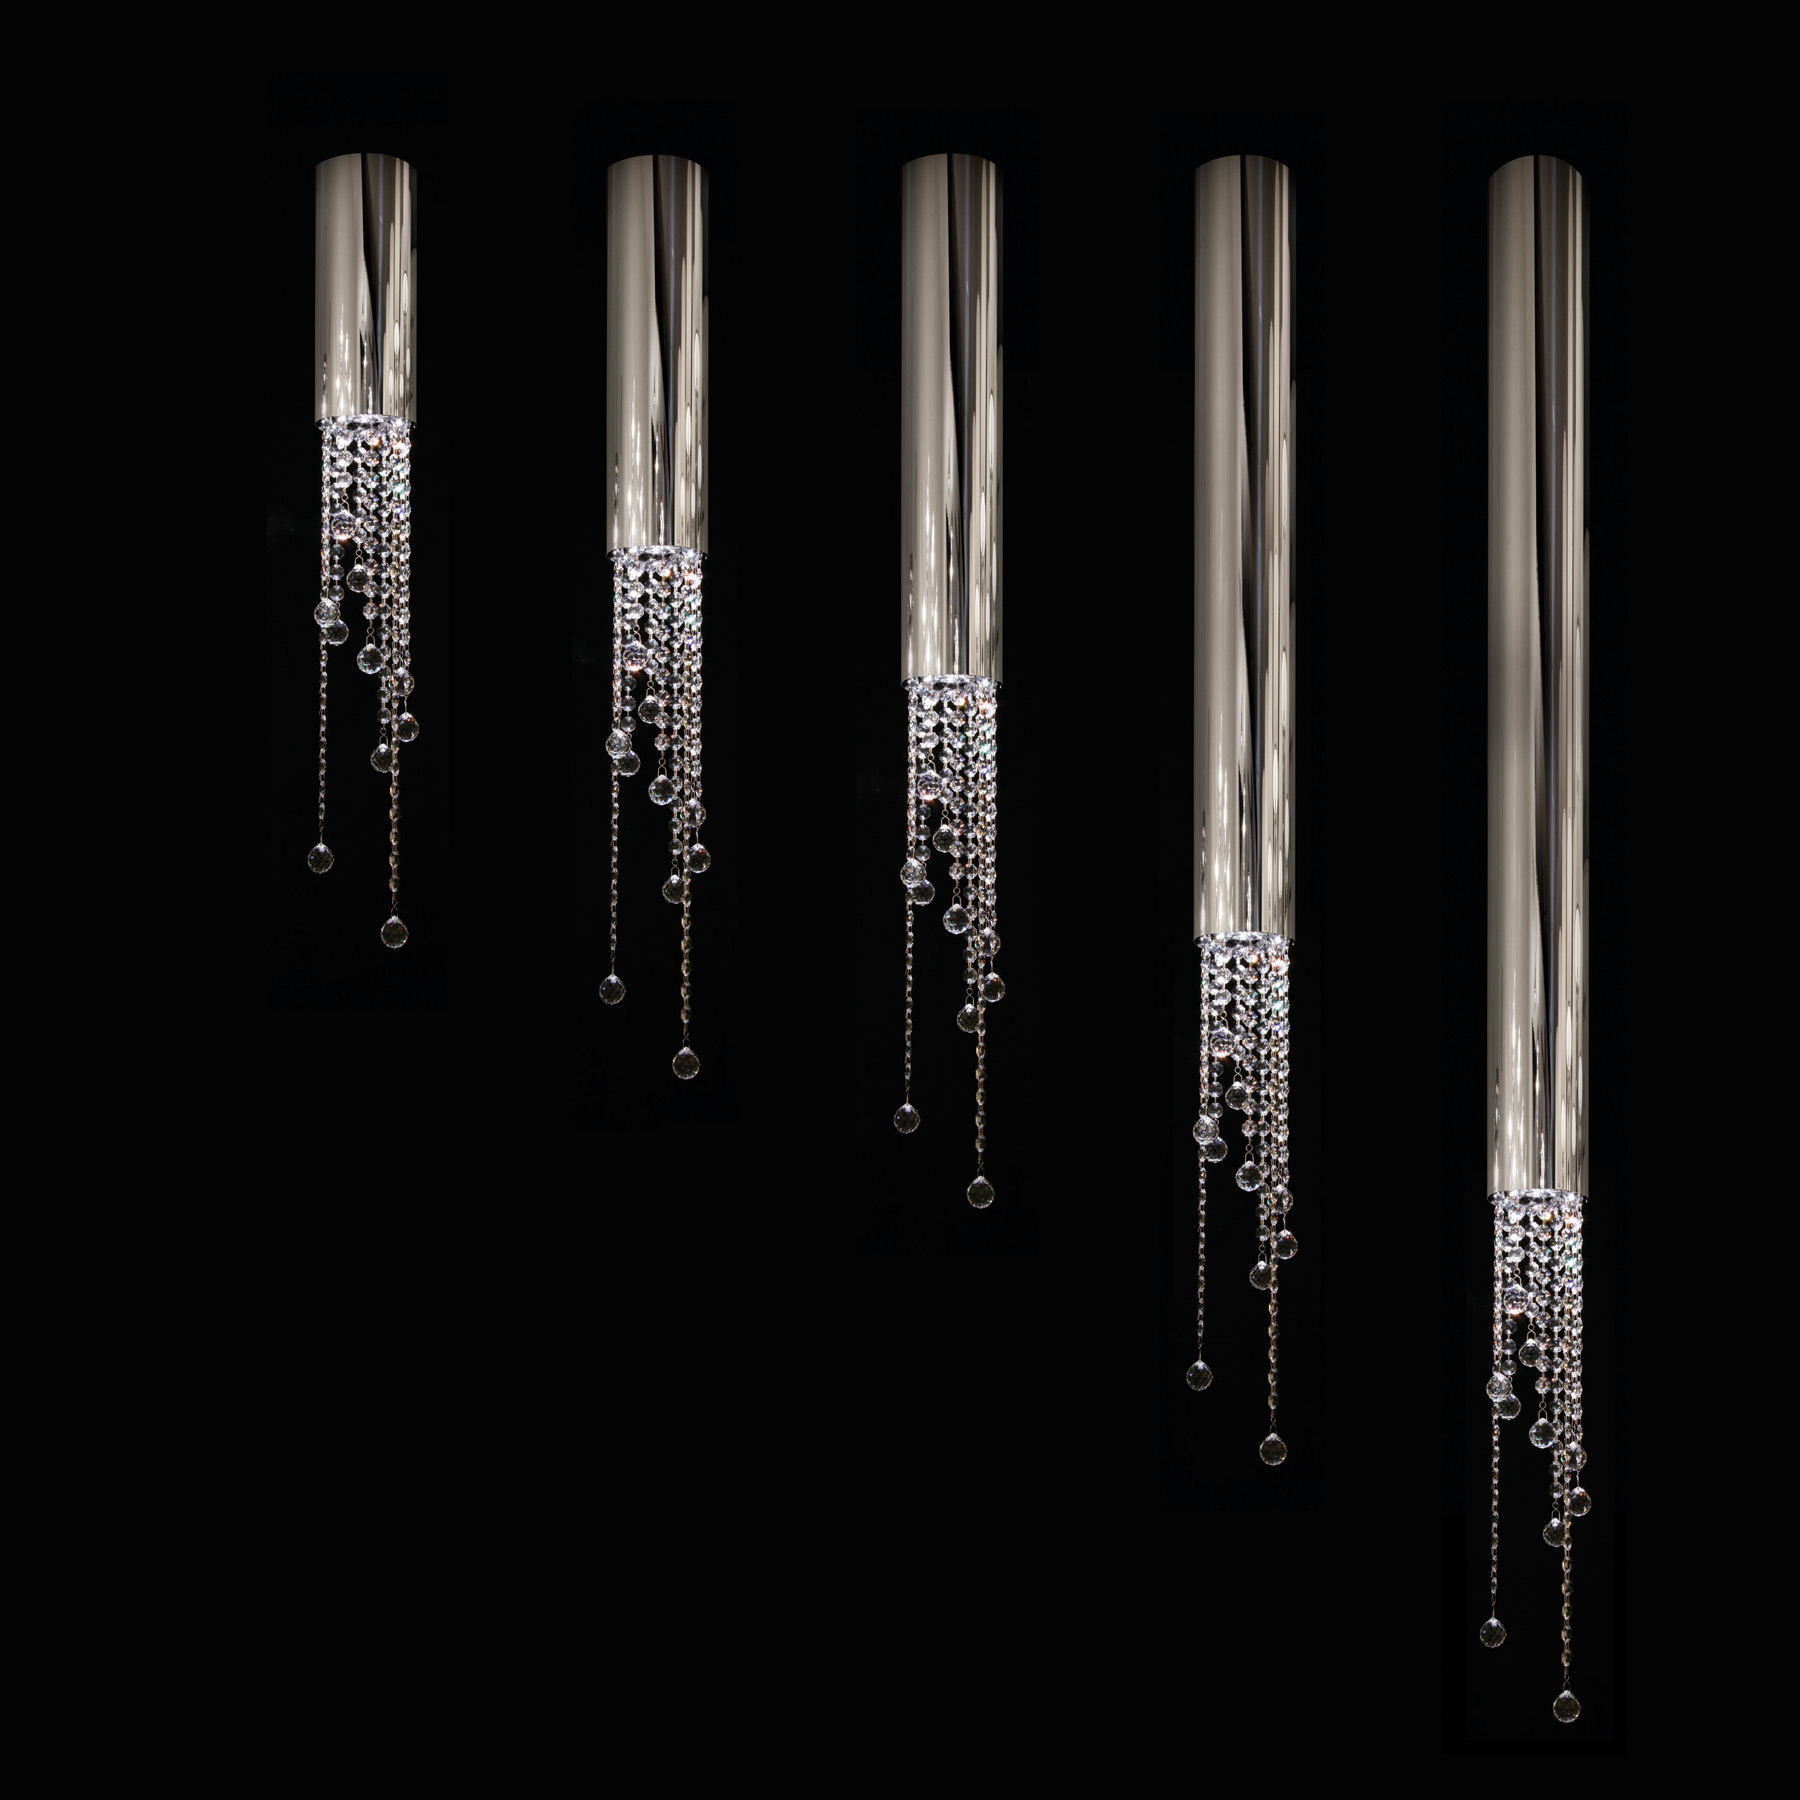 registreren Smelten informeel Sexy Crystals Ceiling Light with Swarovski Crystal by Ilfari | 12365.02 |  ILF73807